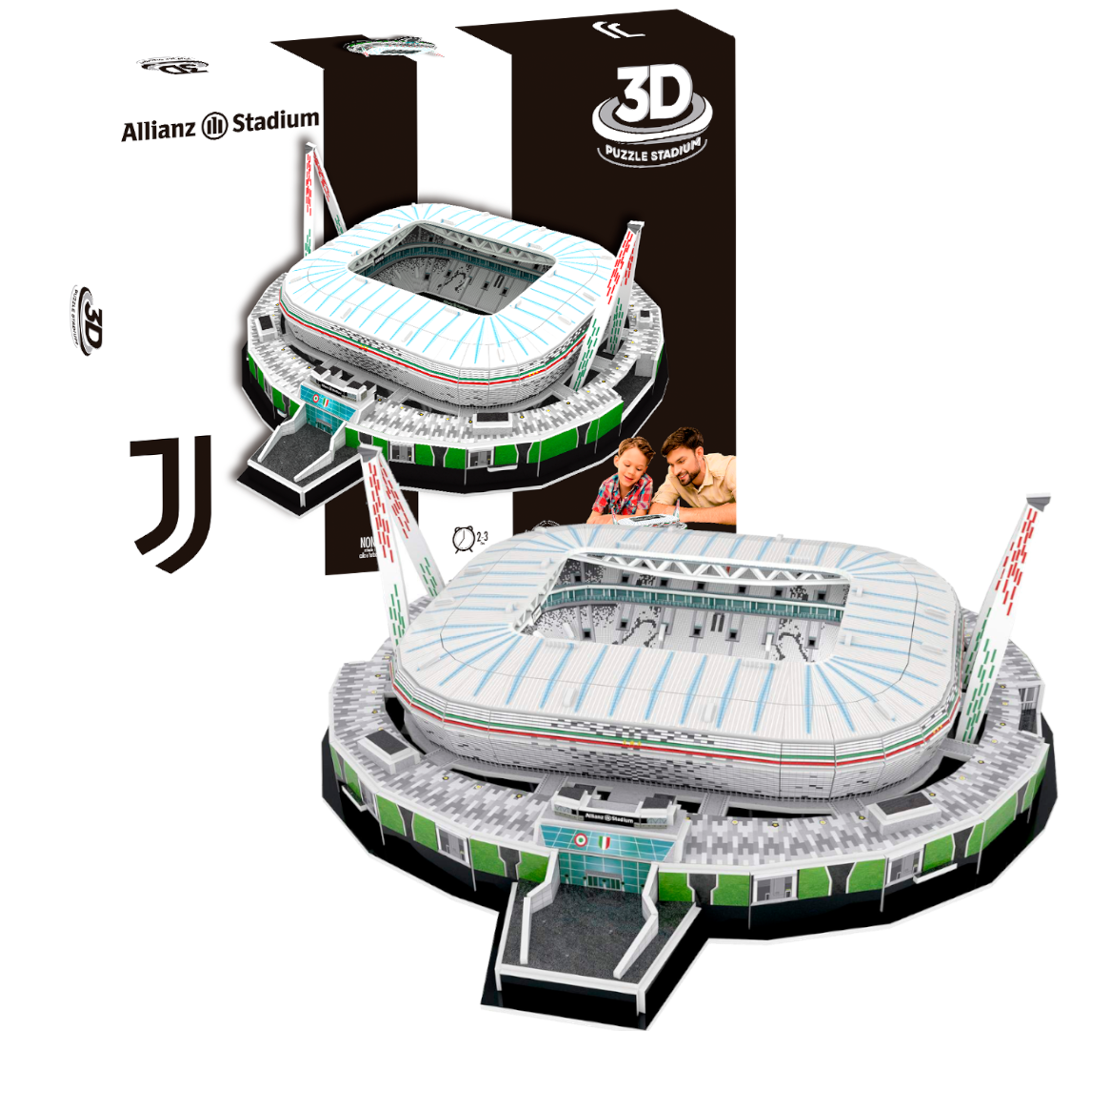 Juventus Stadio Allianz - Puzzle 3D - Specialista in maglie da calcio  vintage, maglie retrò e moda retrò.